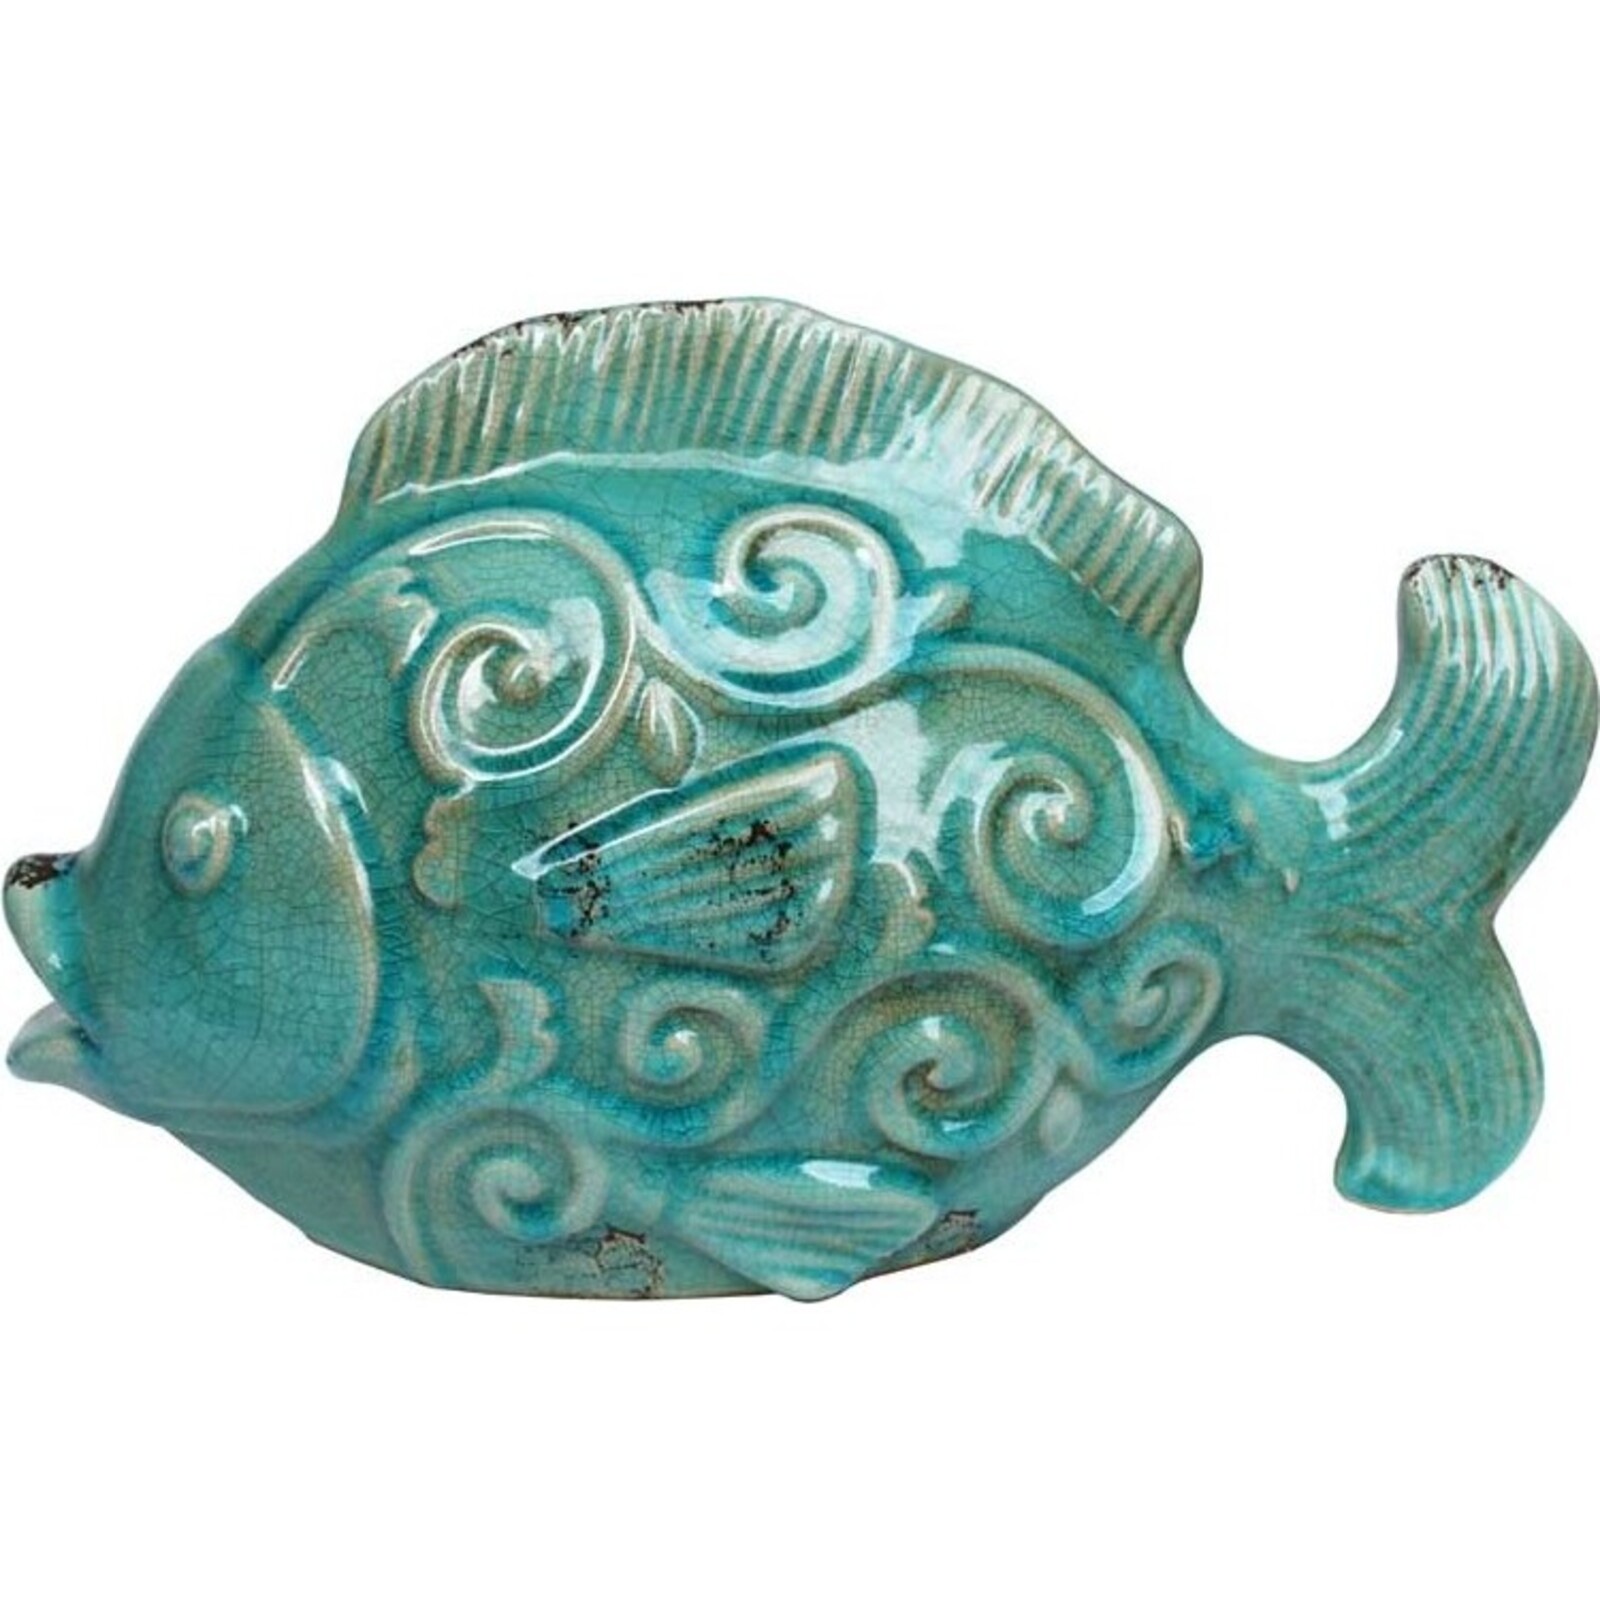 Ceramic Swirl Fish